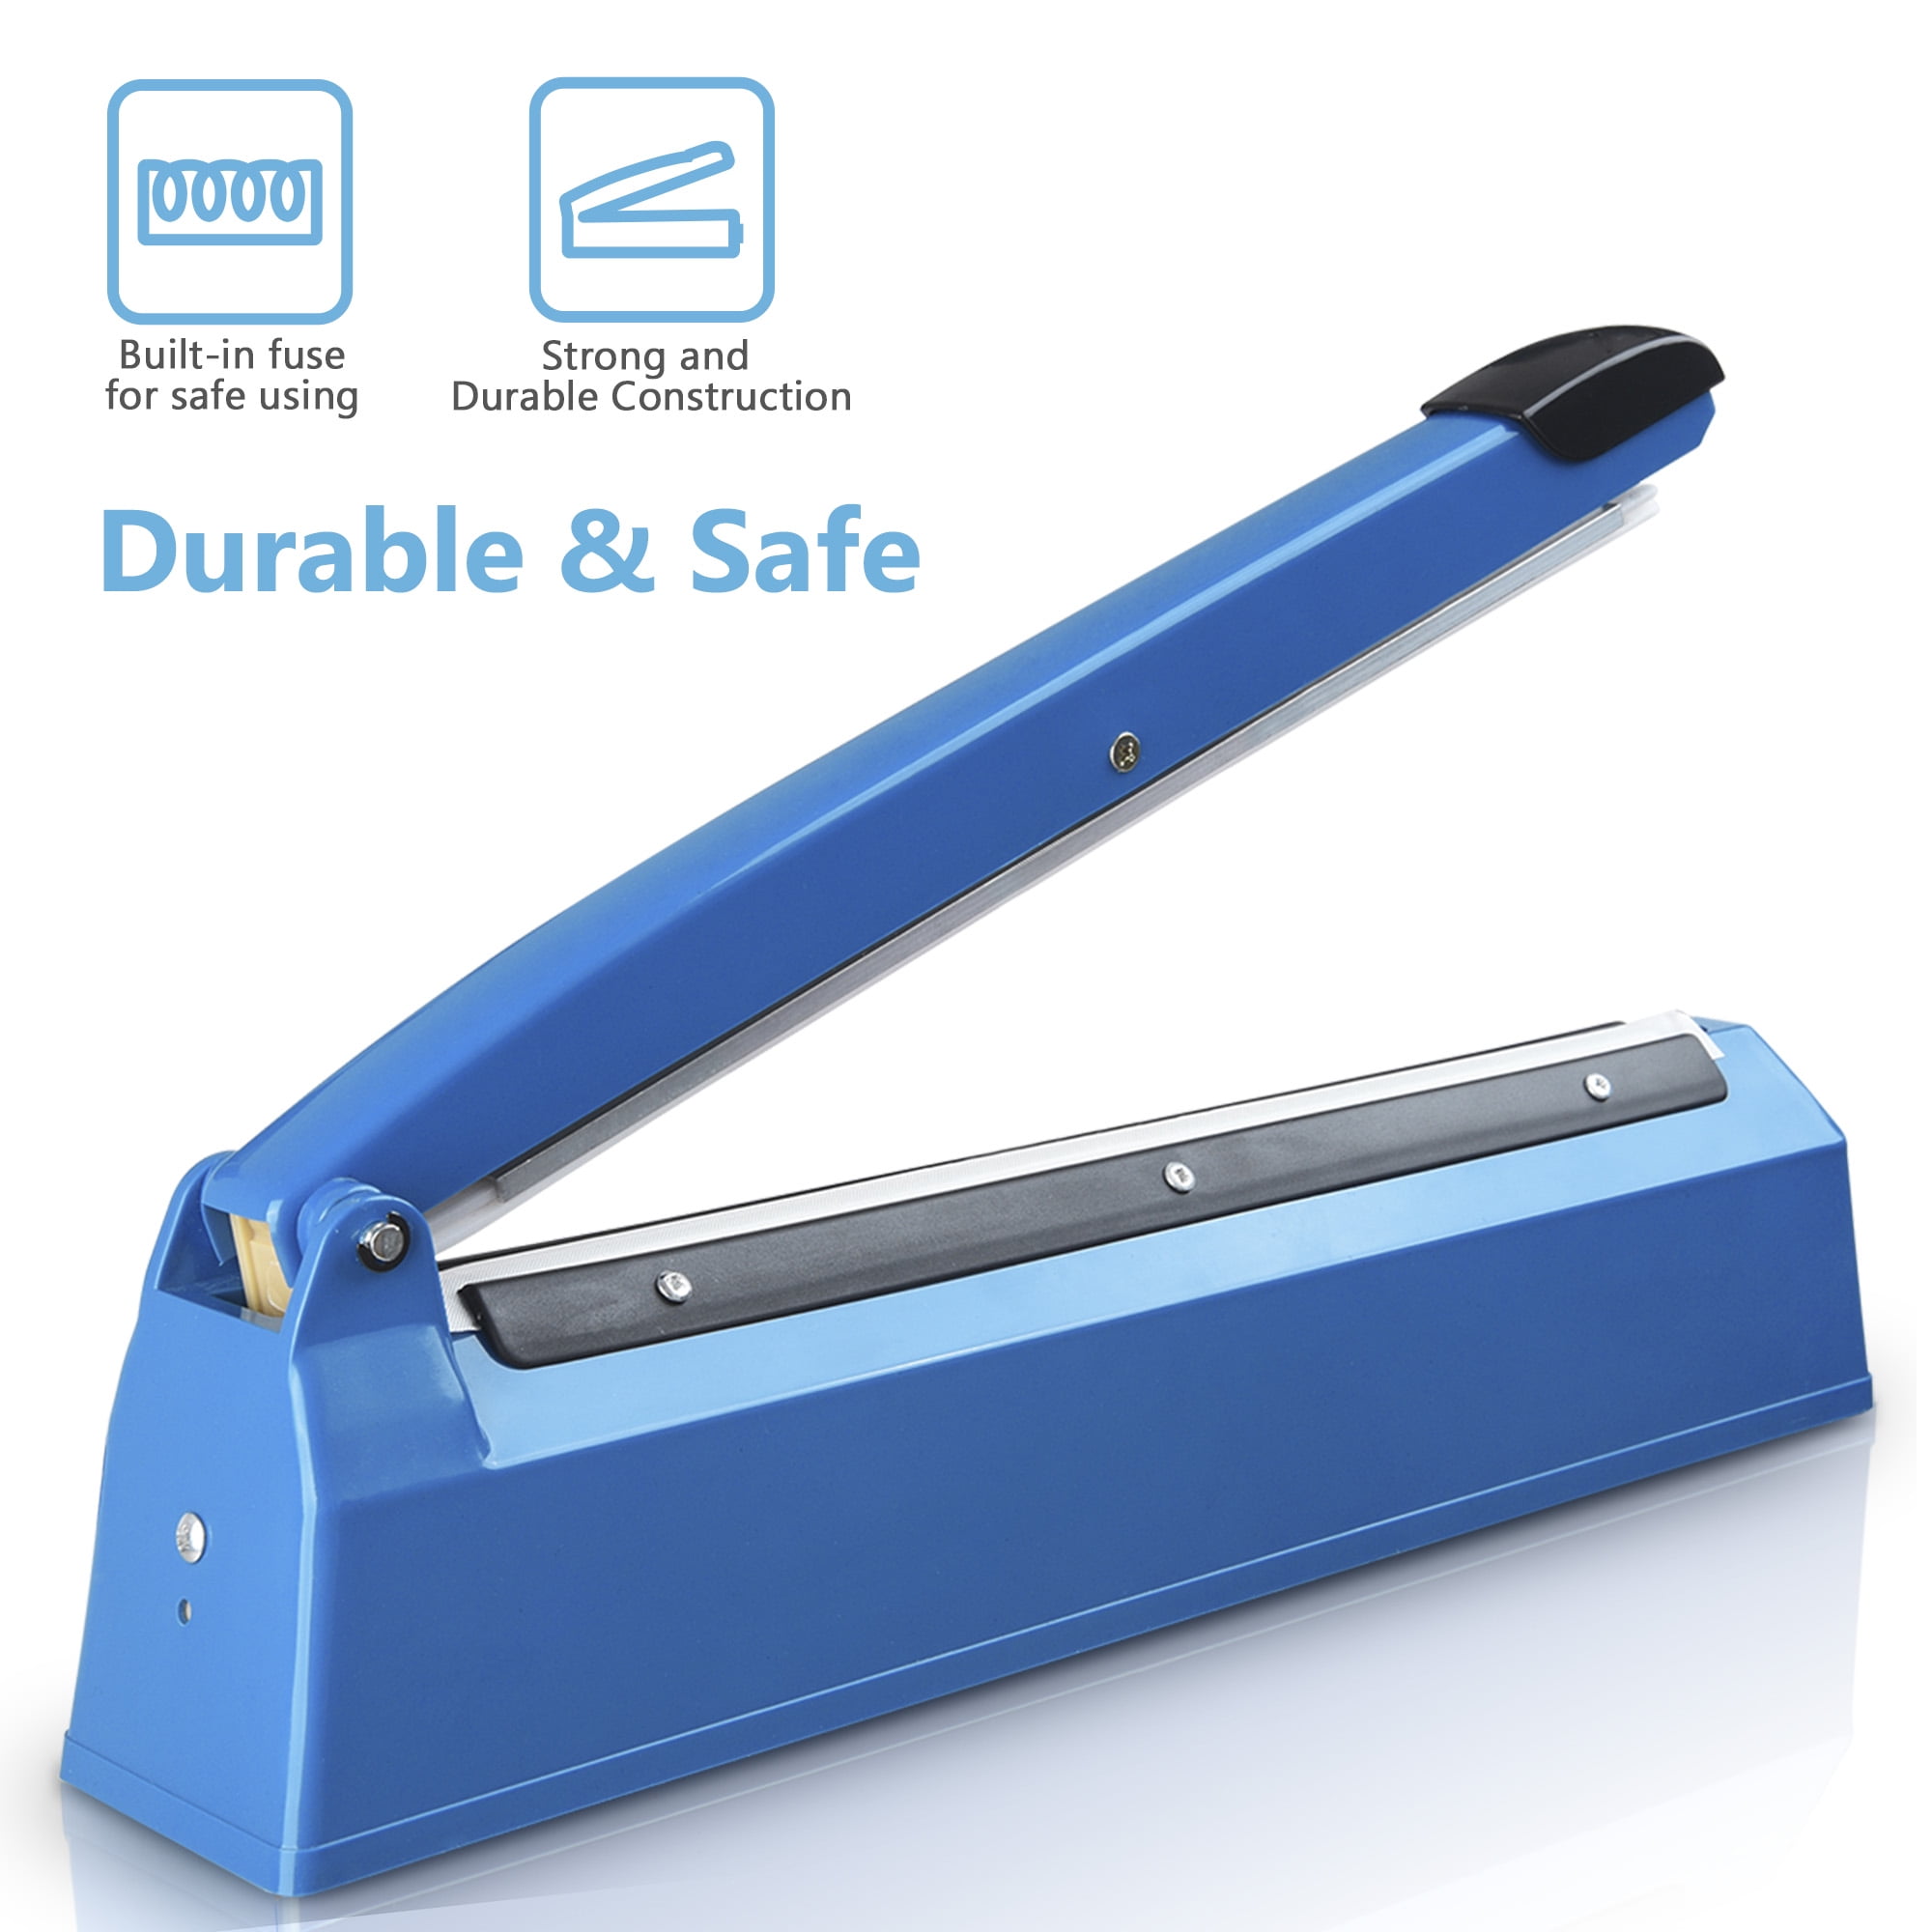 SEEUTEK Biolde 8 inch Blue Impulse Bag Sealer, Solid Metal Manual